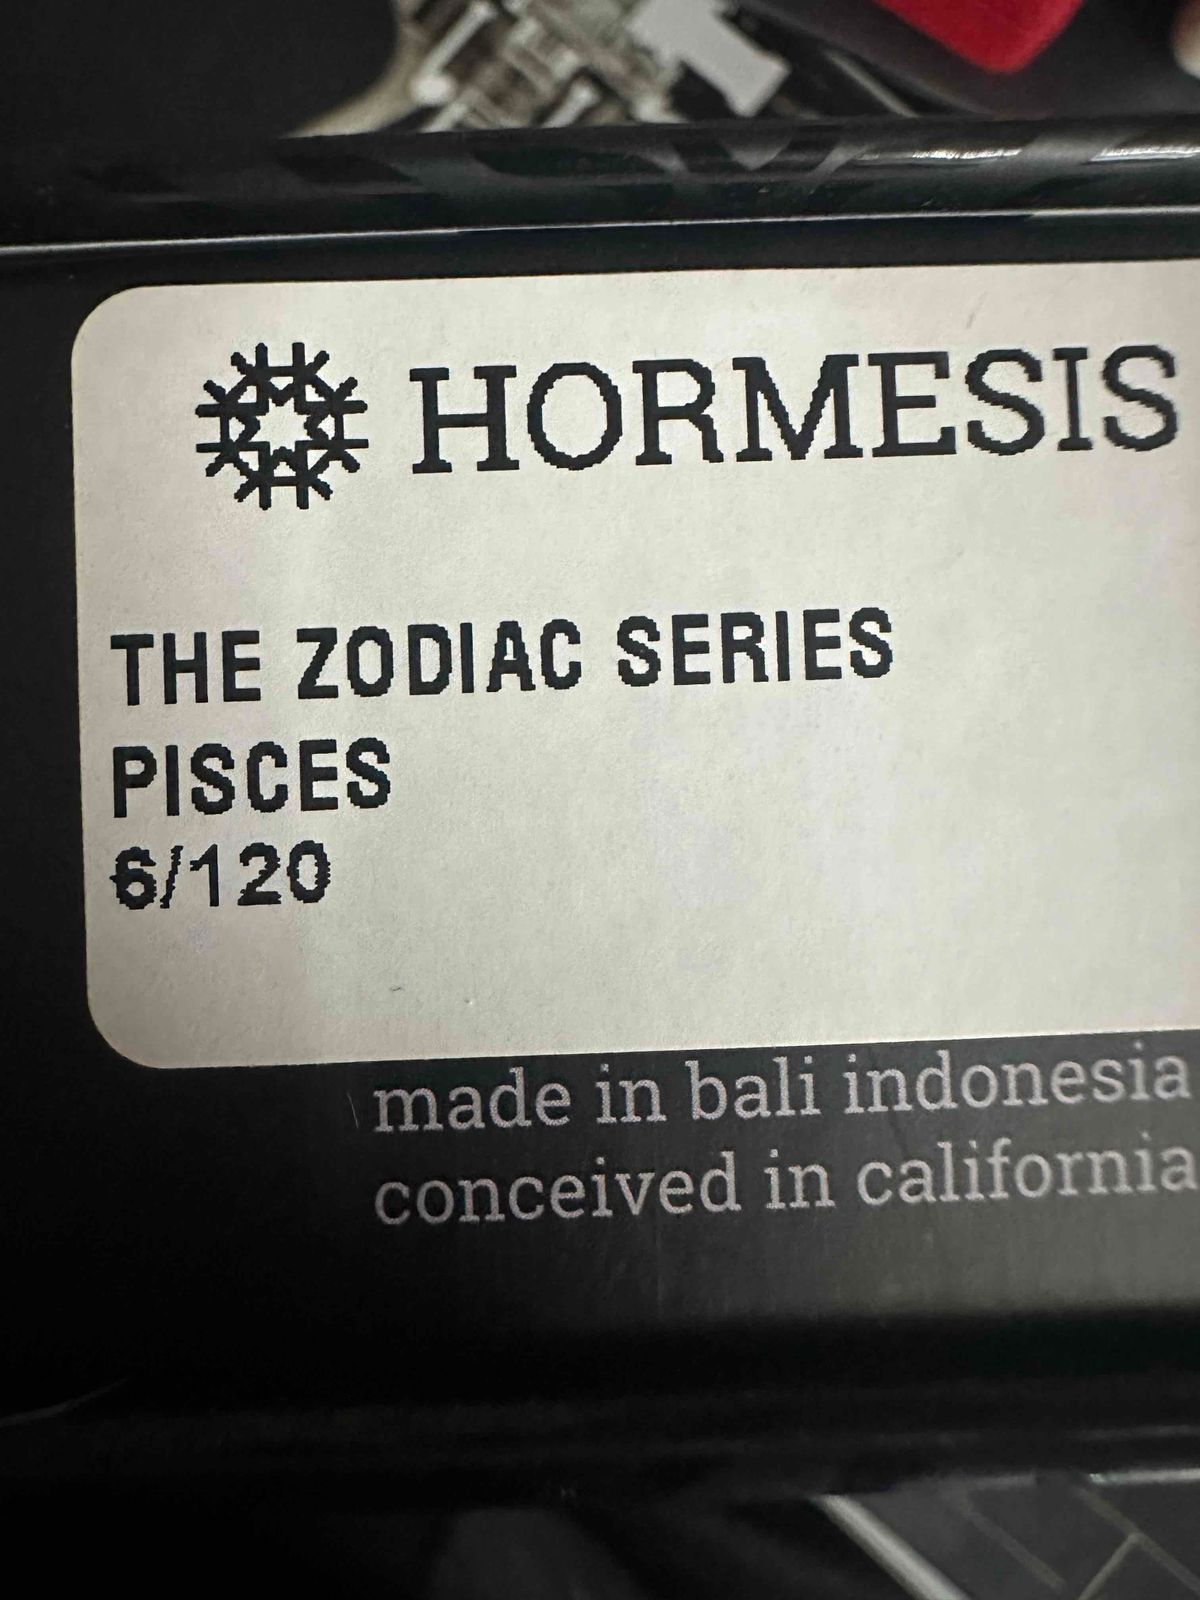 Hormesis - The Zodiac Series Pisces